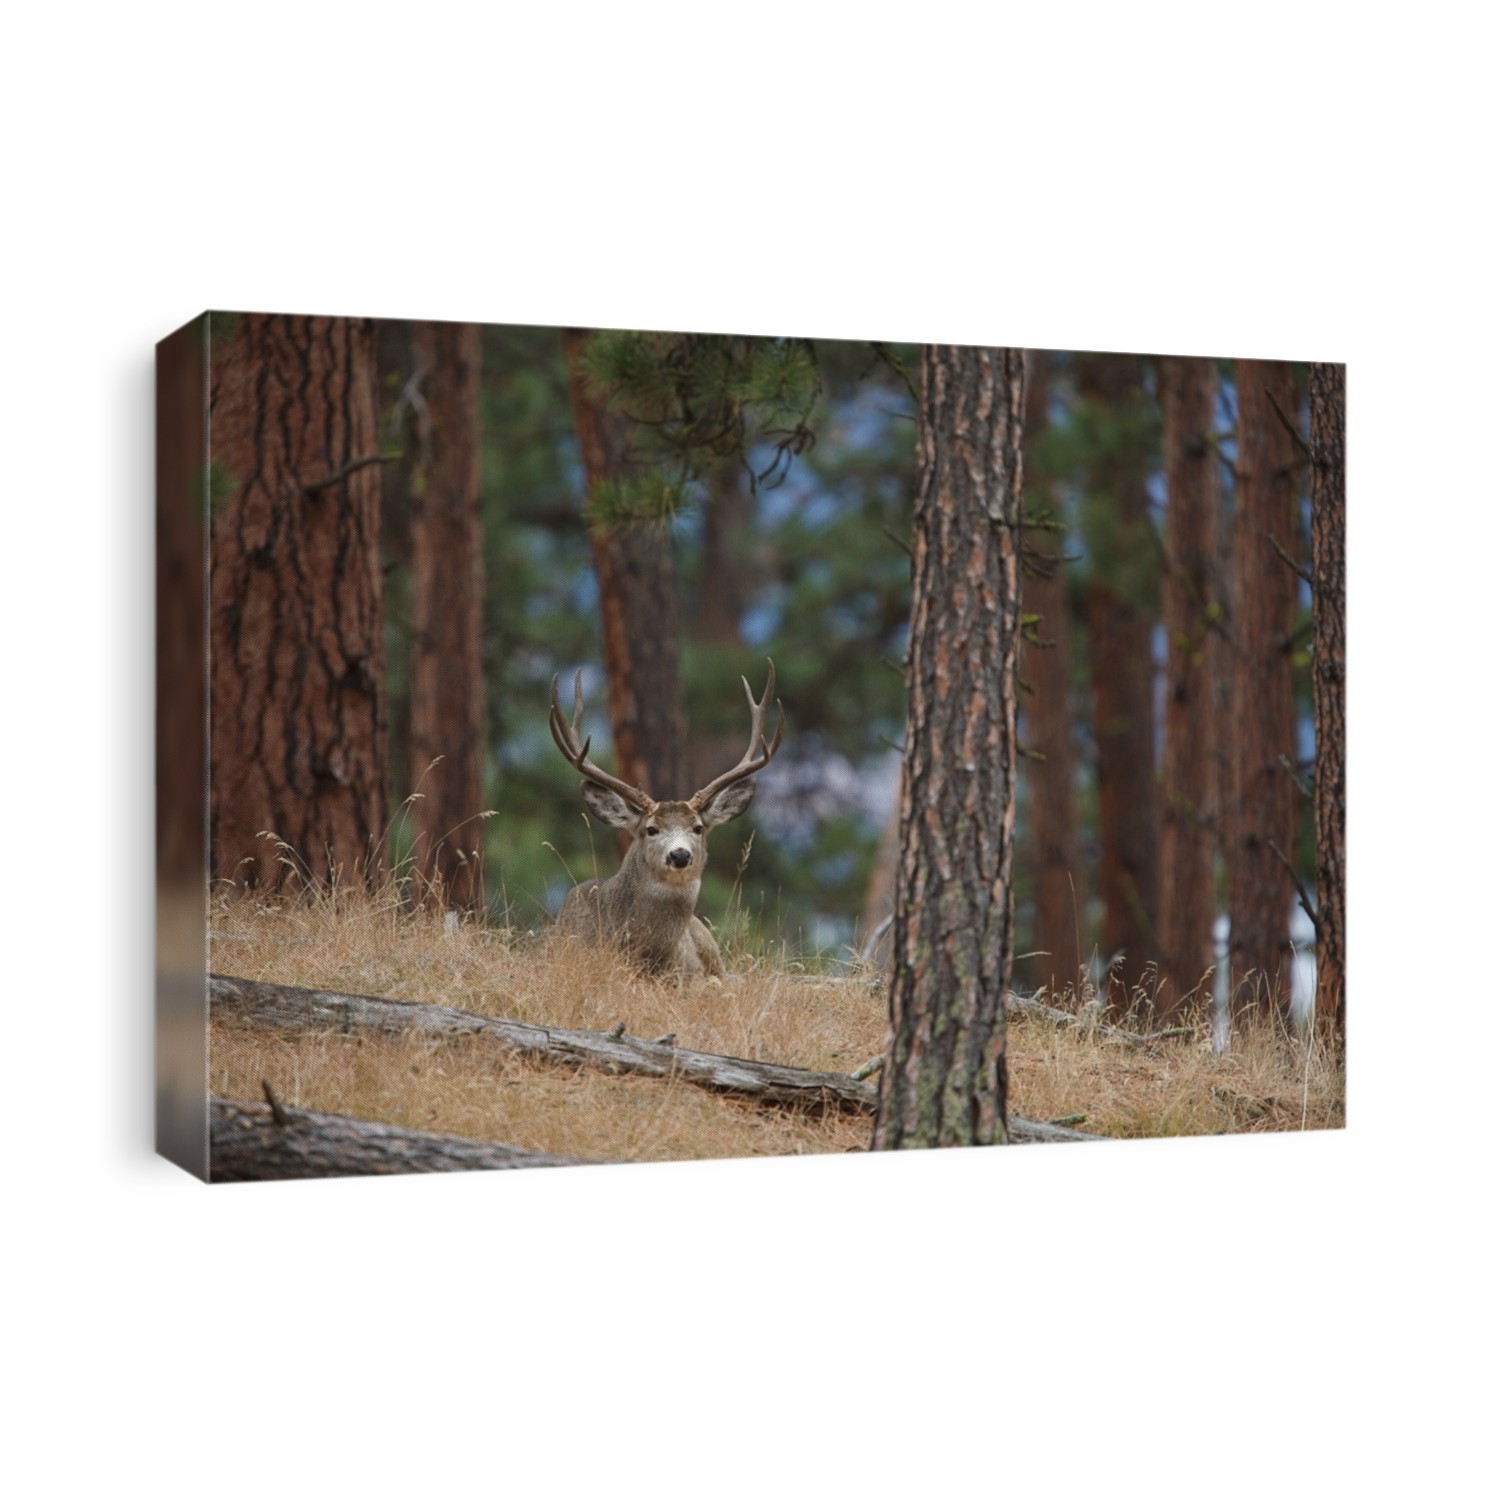 Mule Deer Buck bedded in a Ponderosa Pine forest